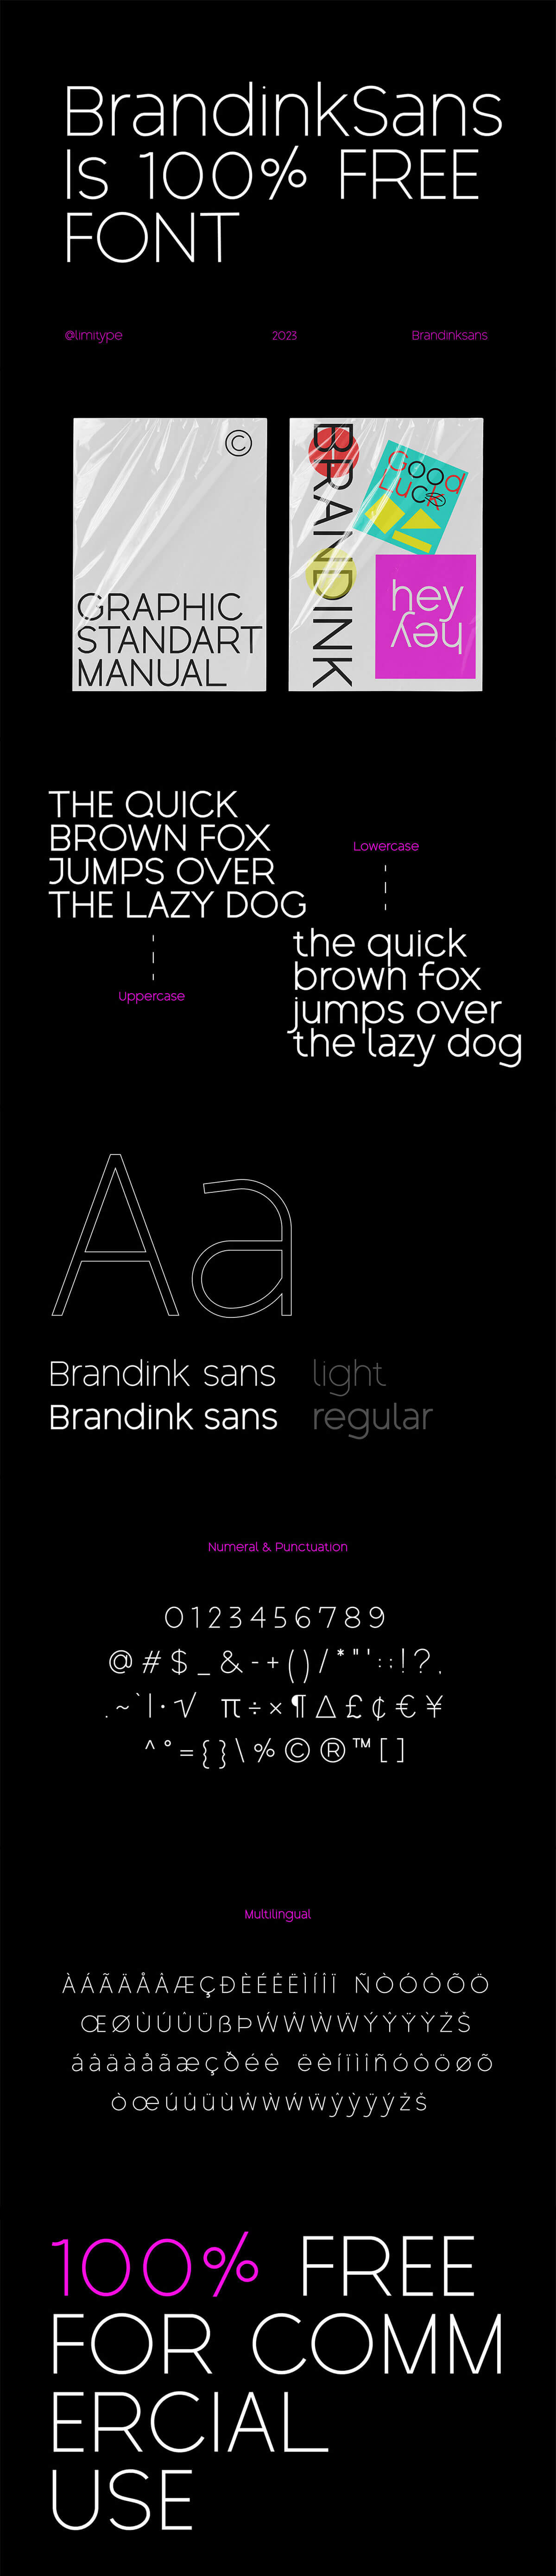 Brandink Sans Serif Font